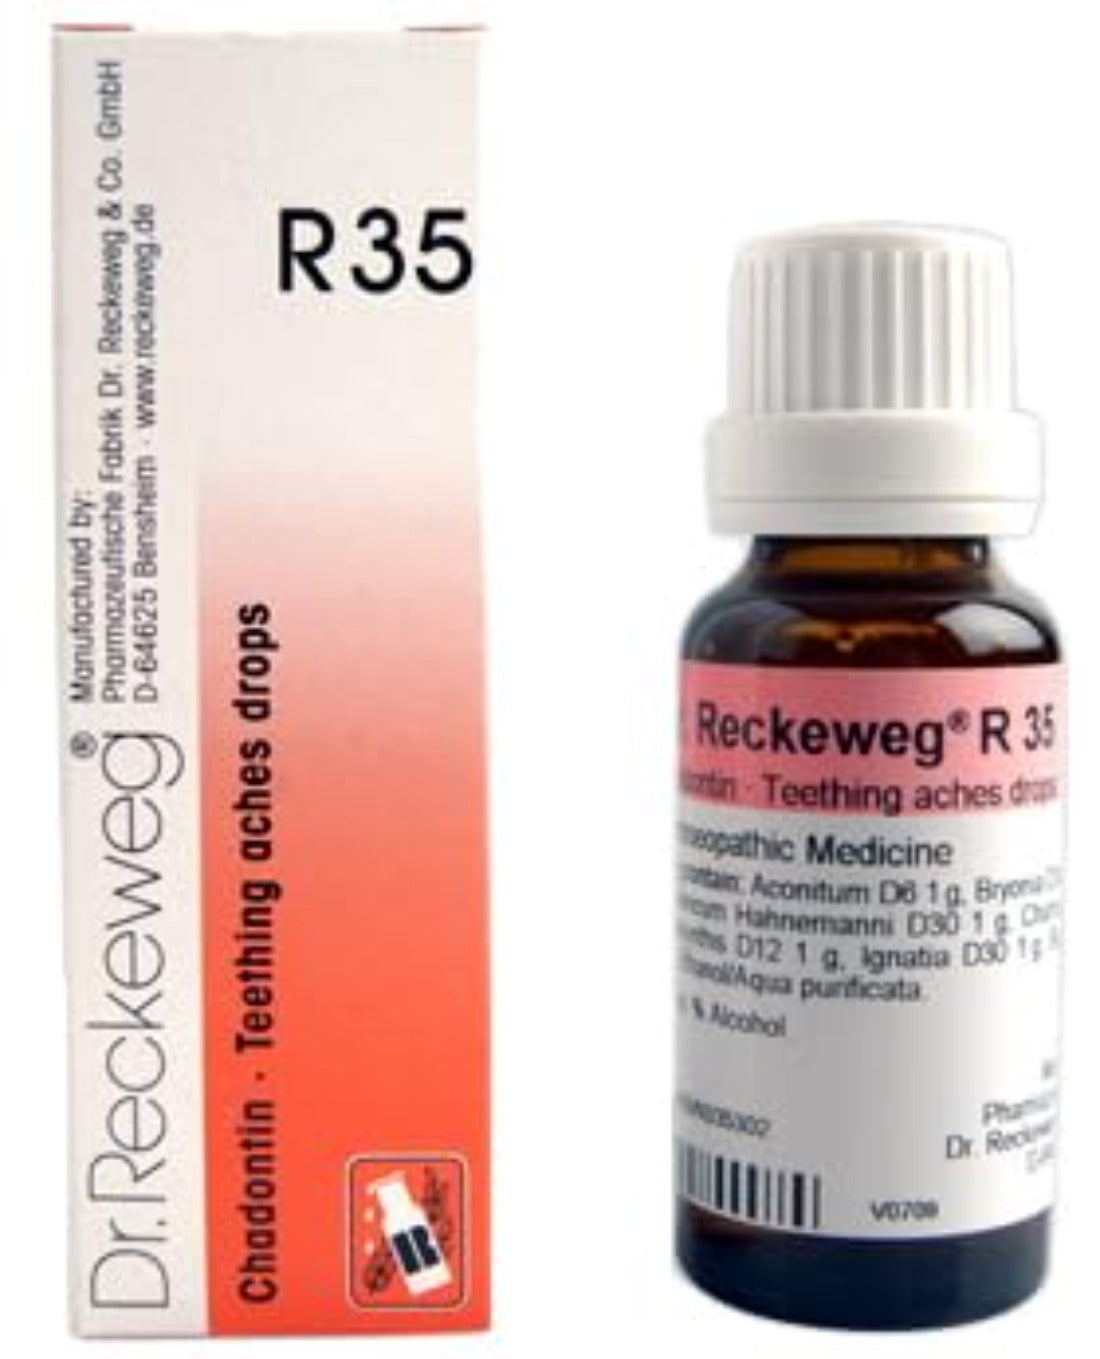 Dr Reckeweg Homoeopathy R35 Teething Aches Drops 22 ml